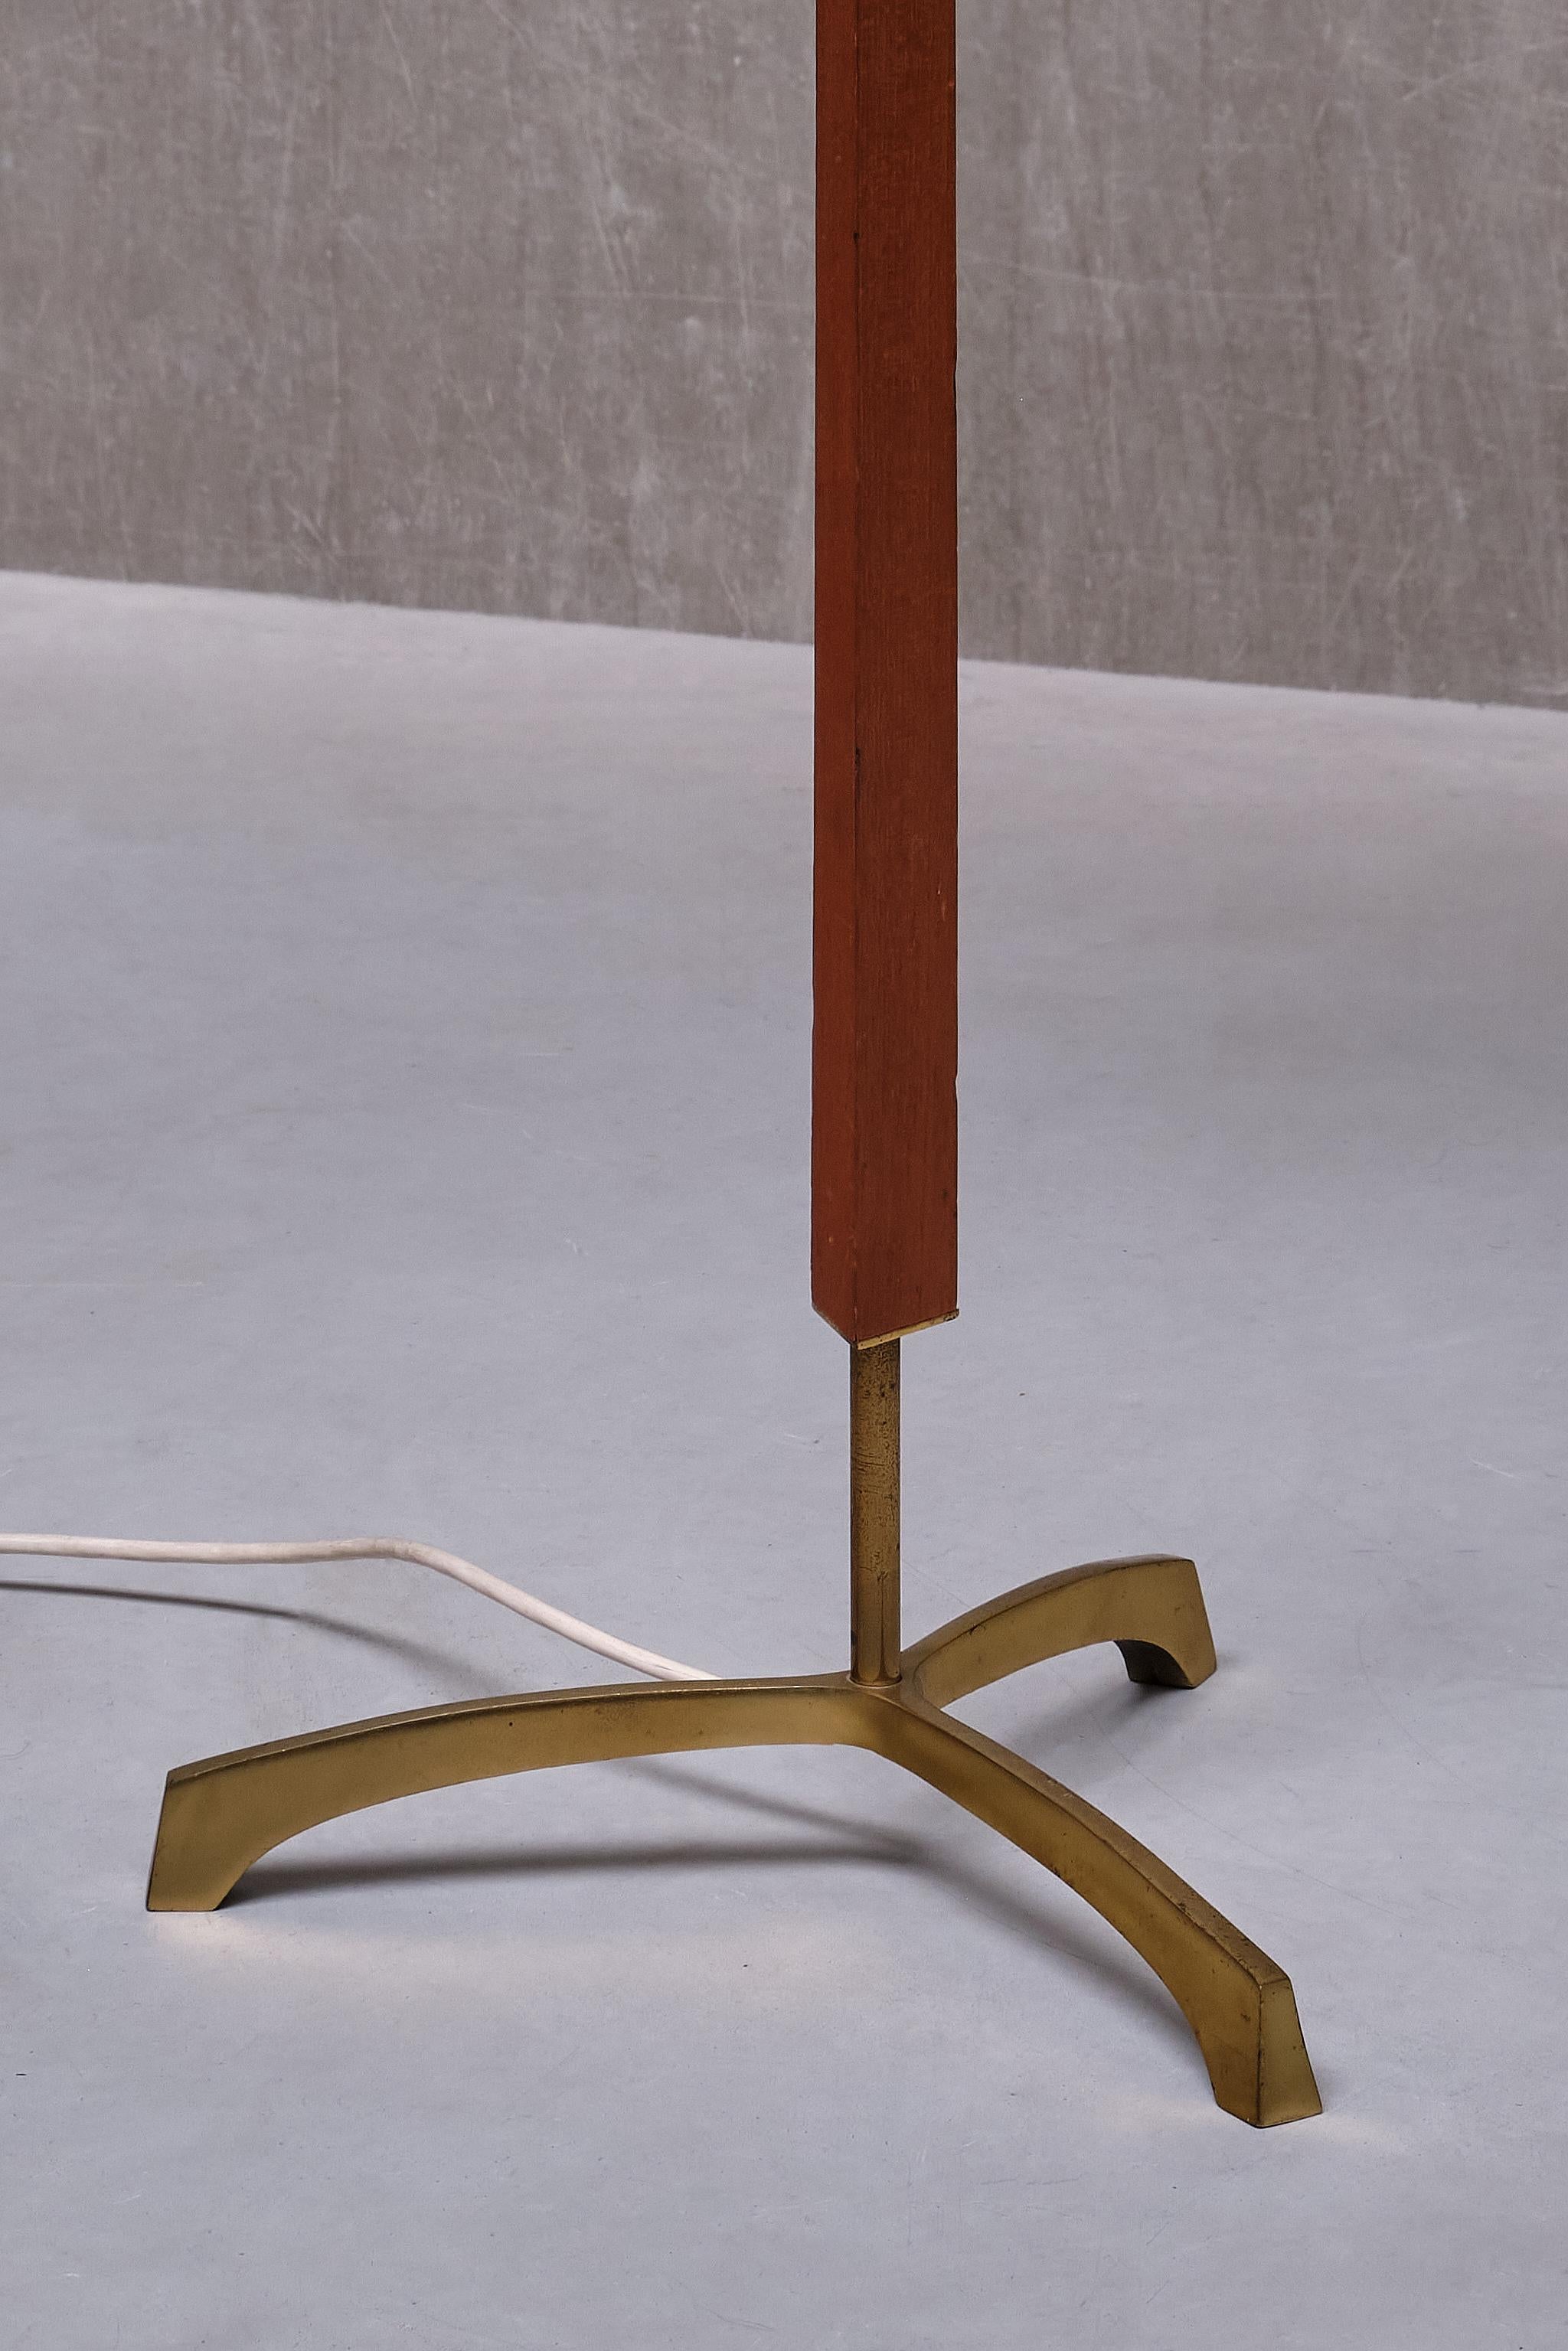 Danish Modern Three Legged Floor Lamp in Brass, Teak and Textured Shade, 1950s For Sale 2